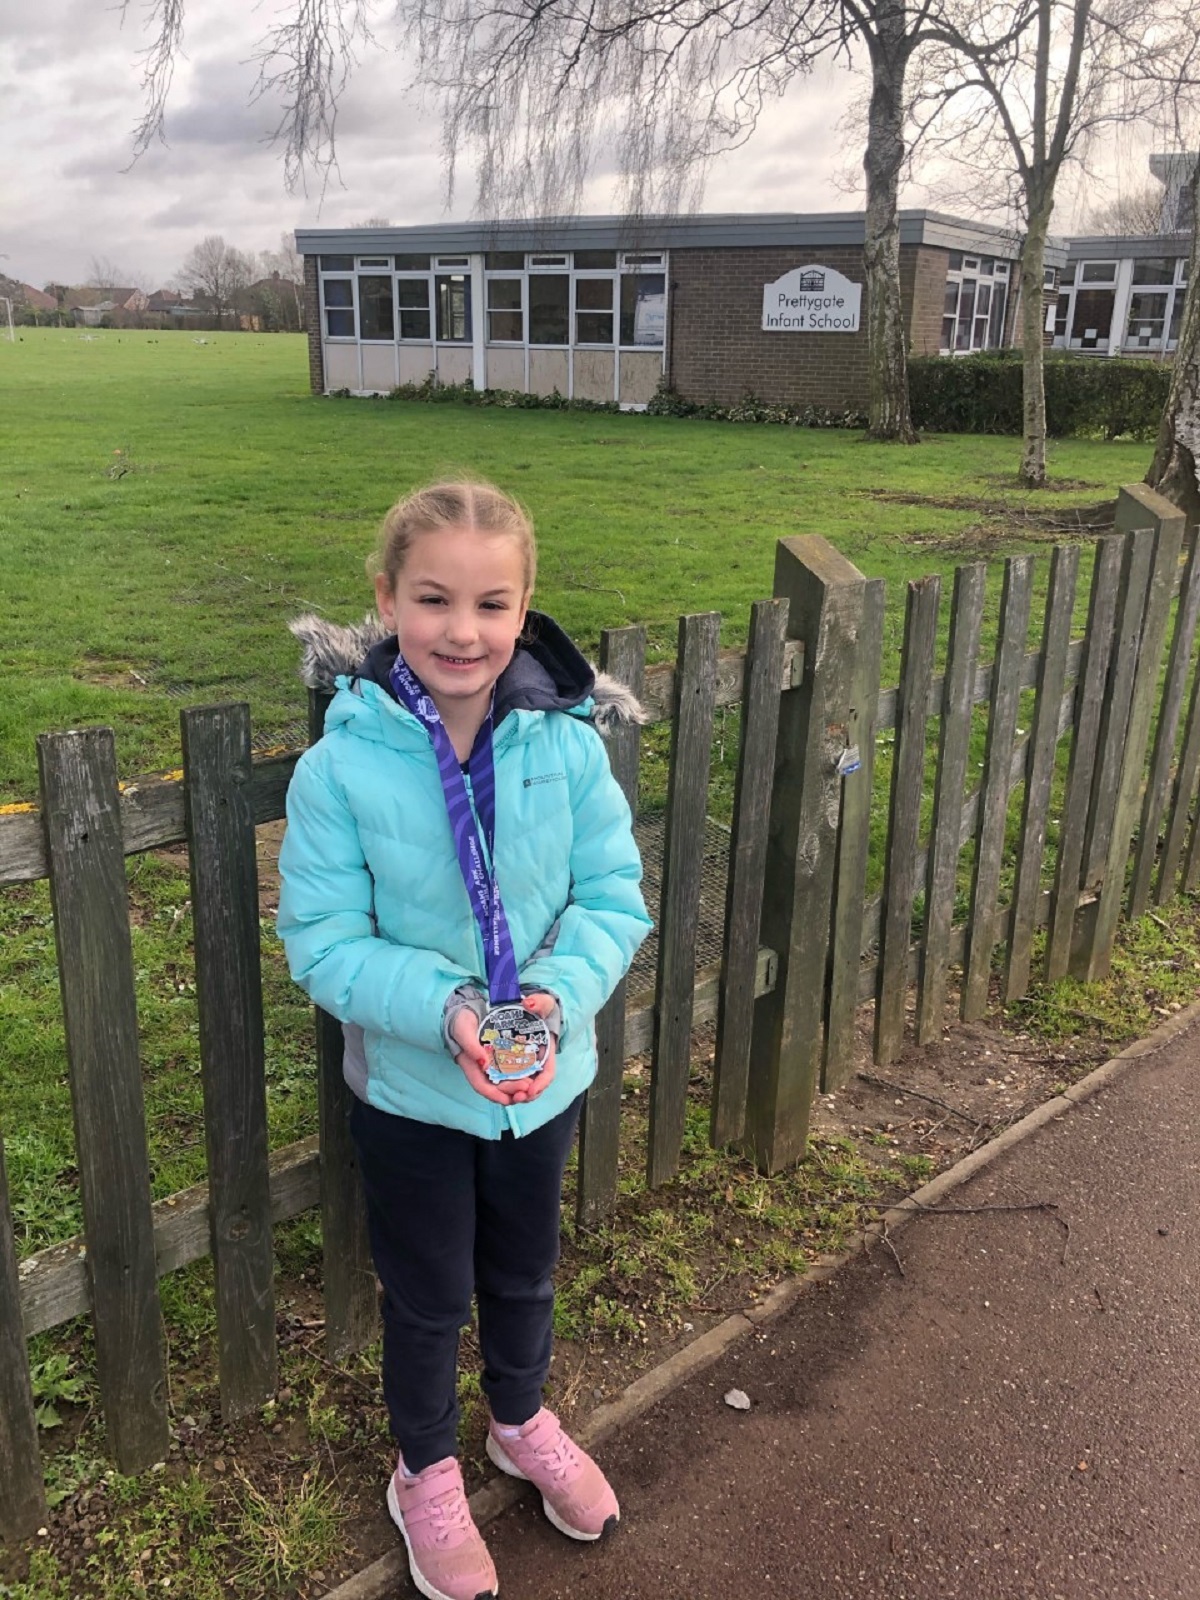 Putting her best foot forward - Prettygate Junior School pupil Phoebe Hogg